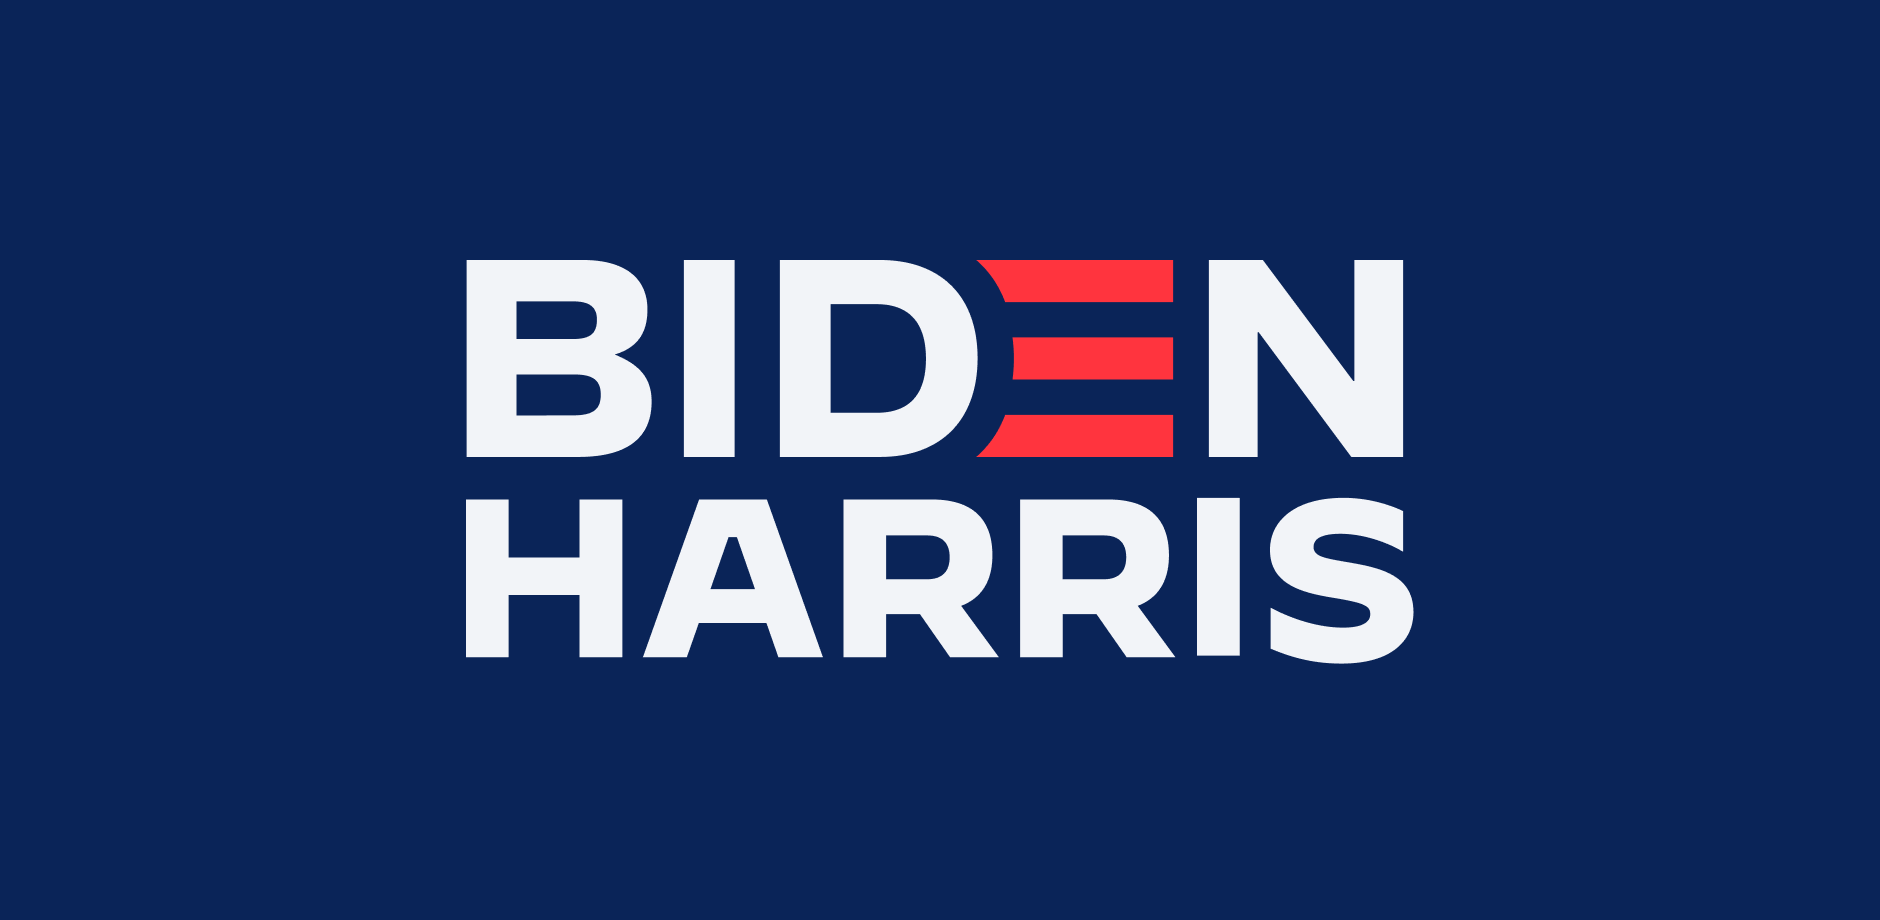 Biden Harris logo white on navy background